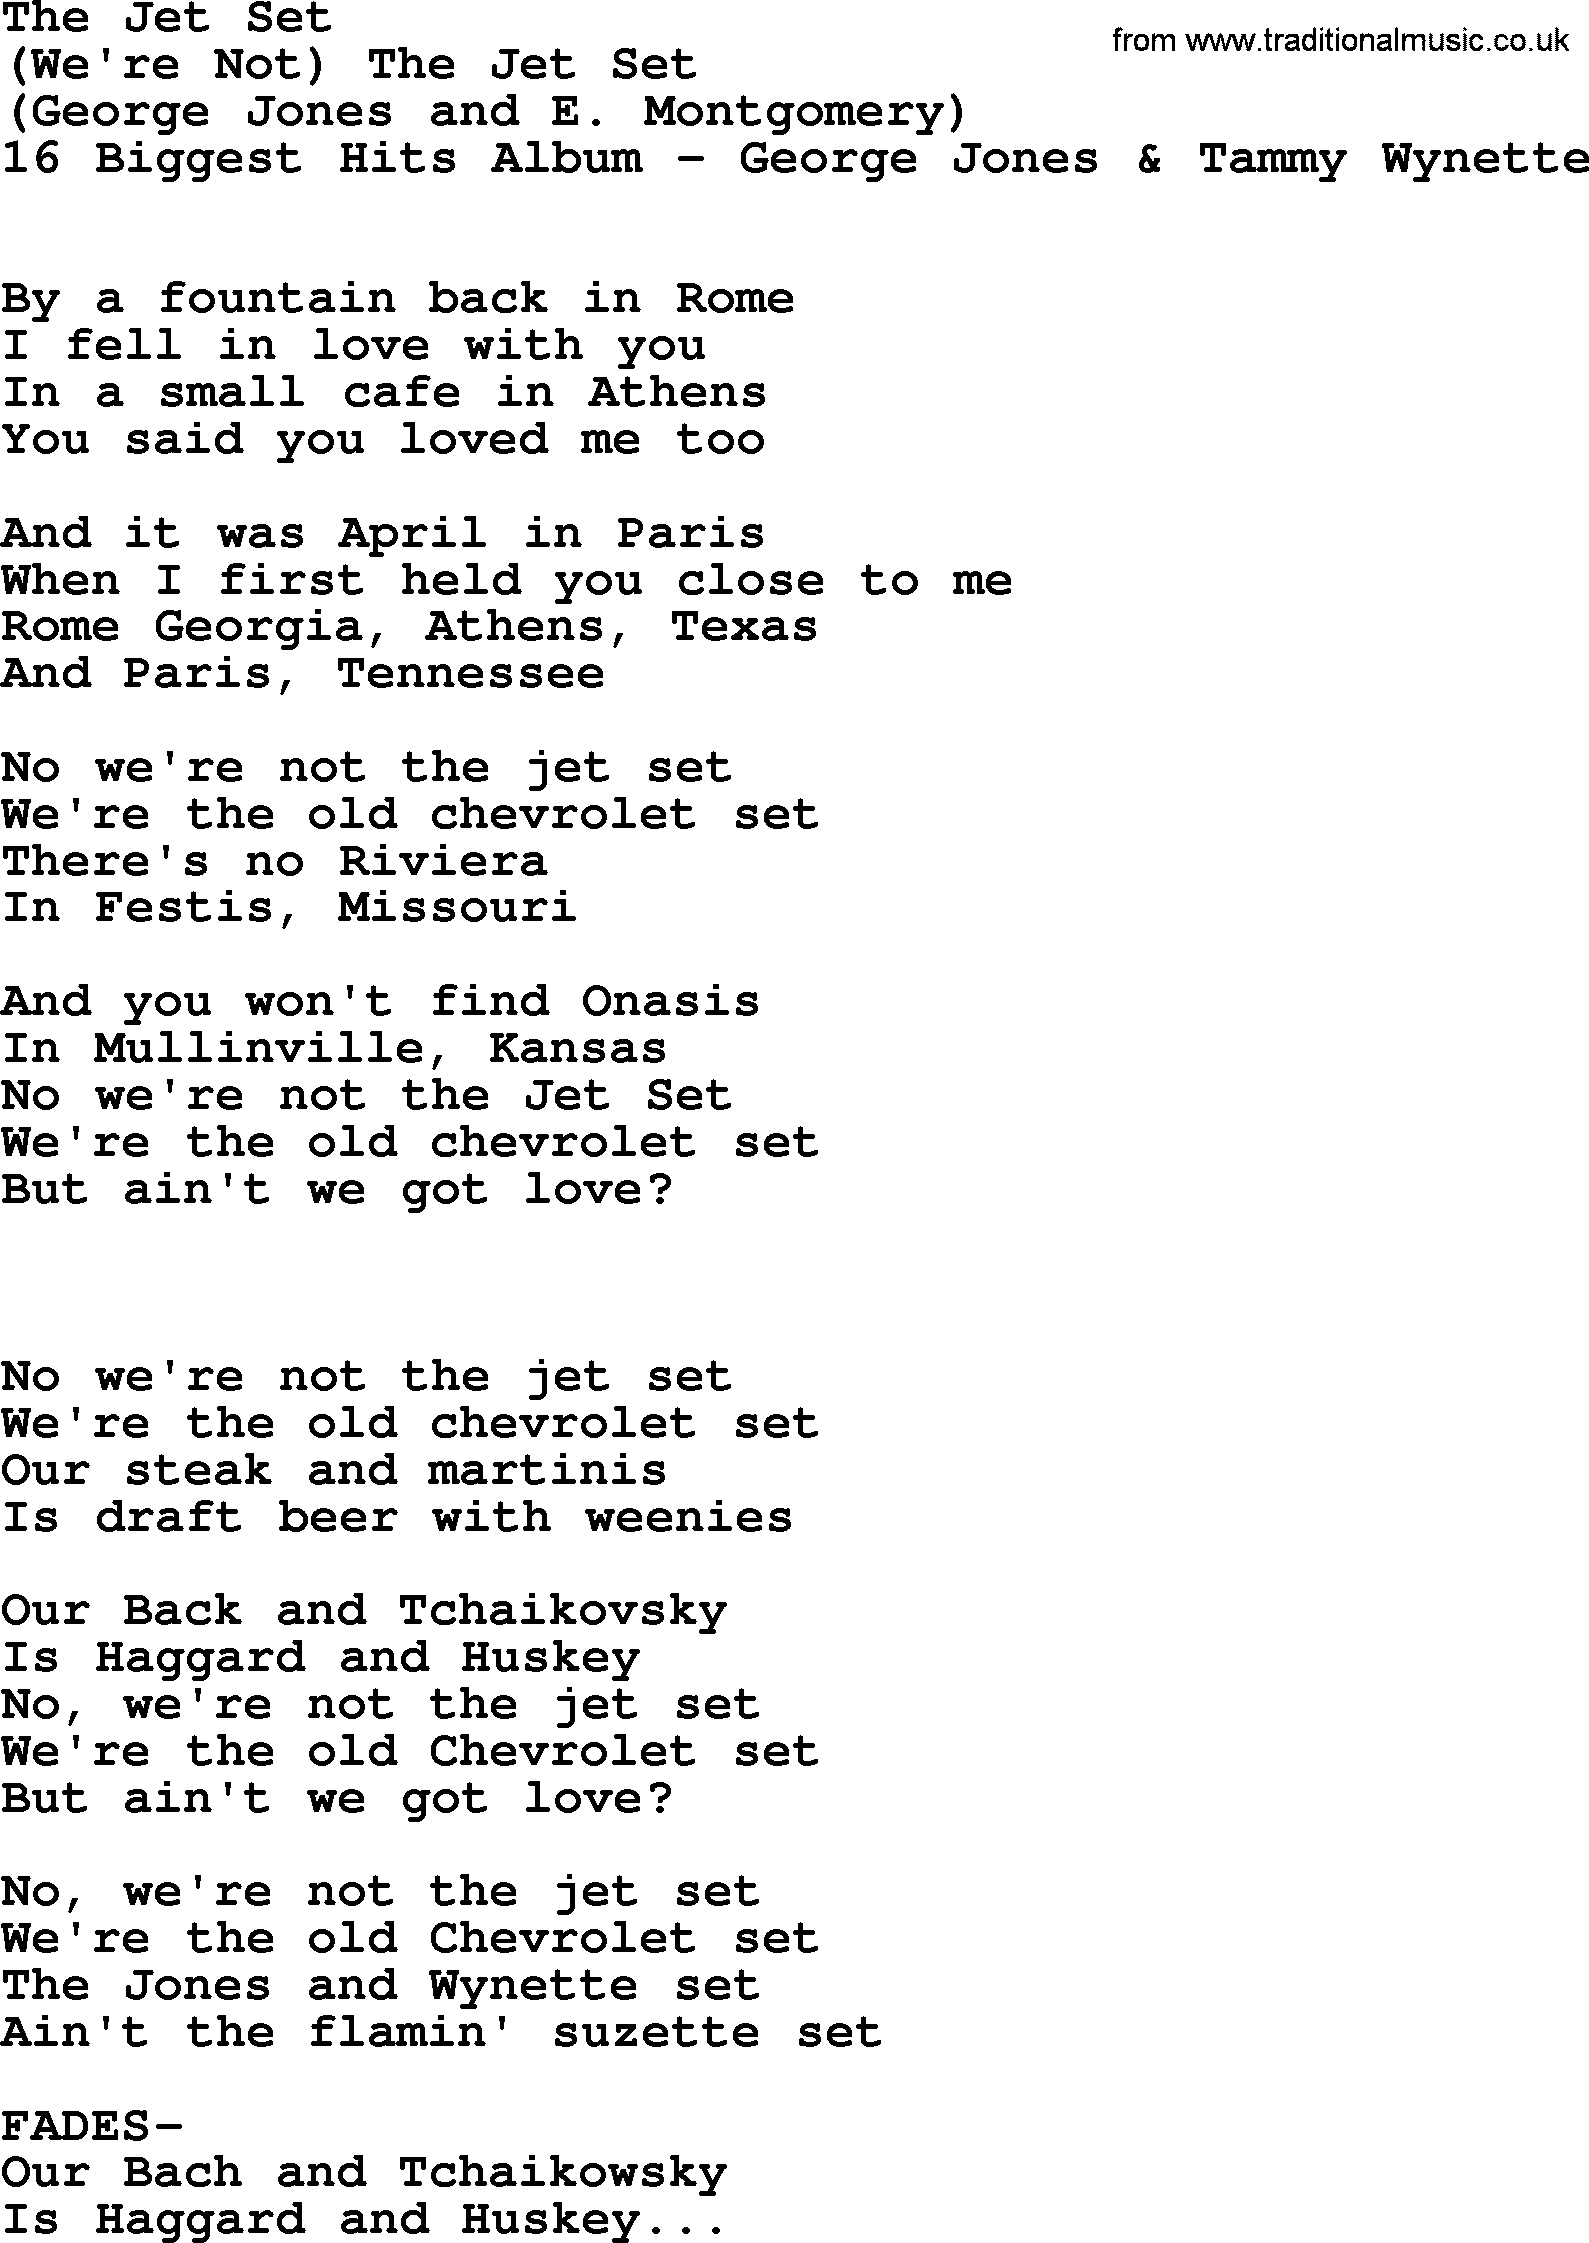 George Jones song: The Jet Set, lyrics and chords